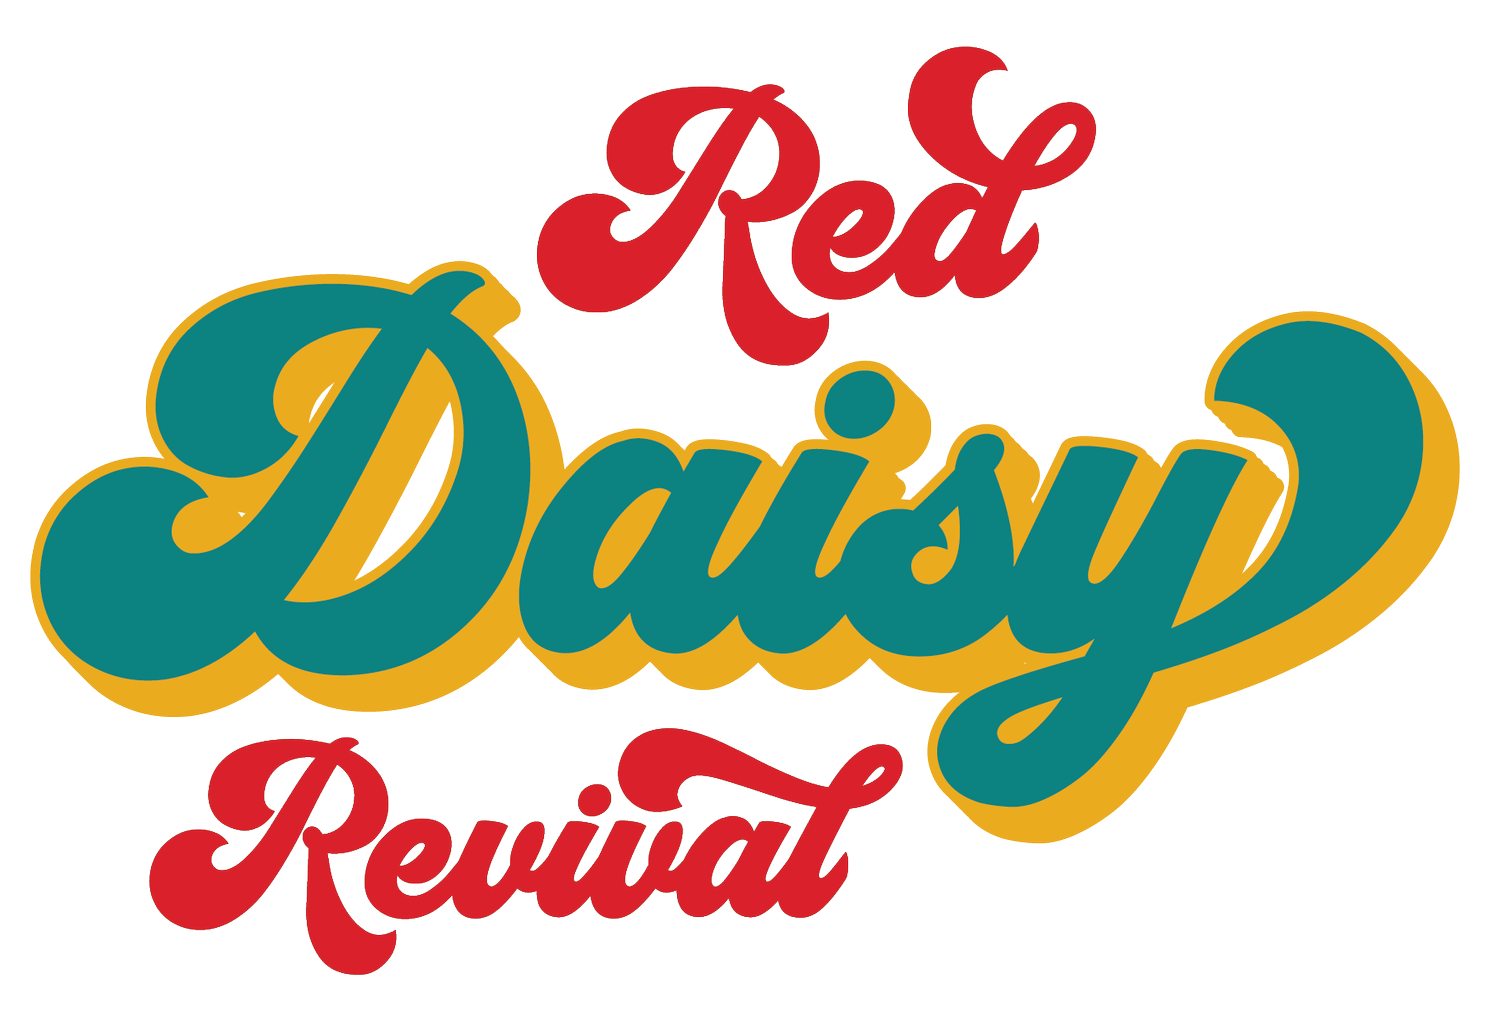 Red Daisy Revival